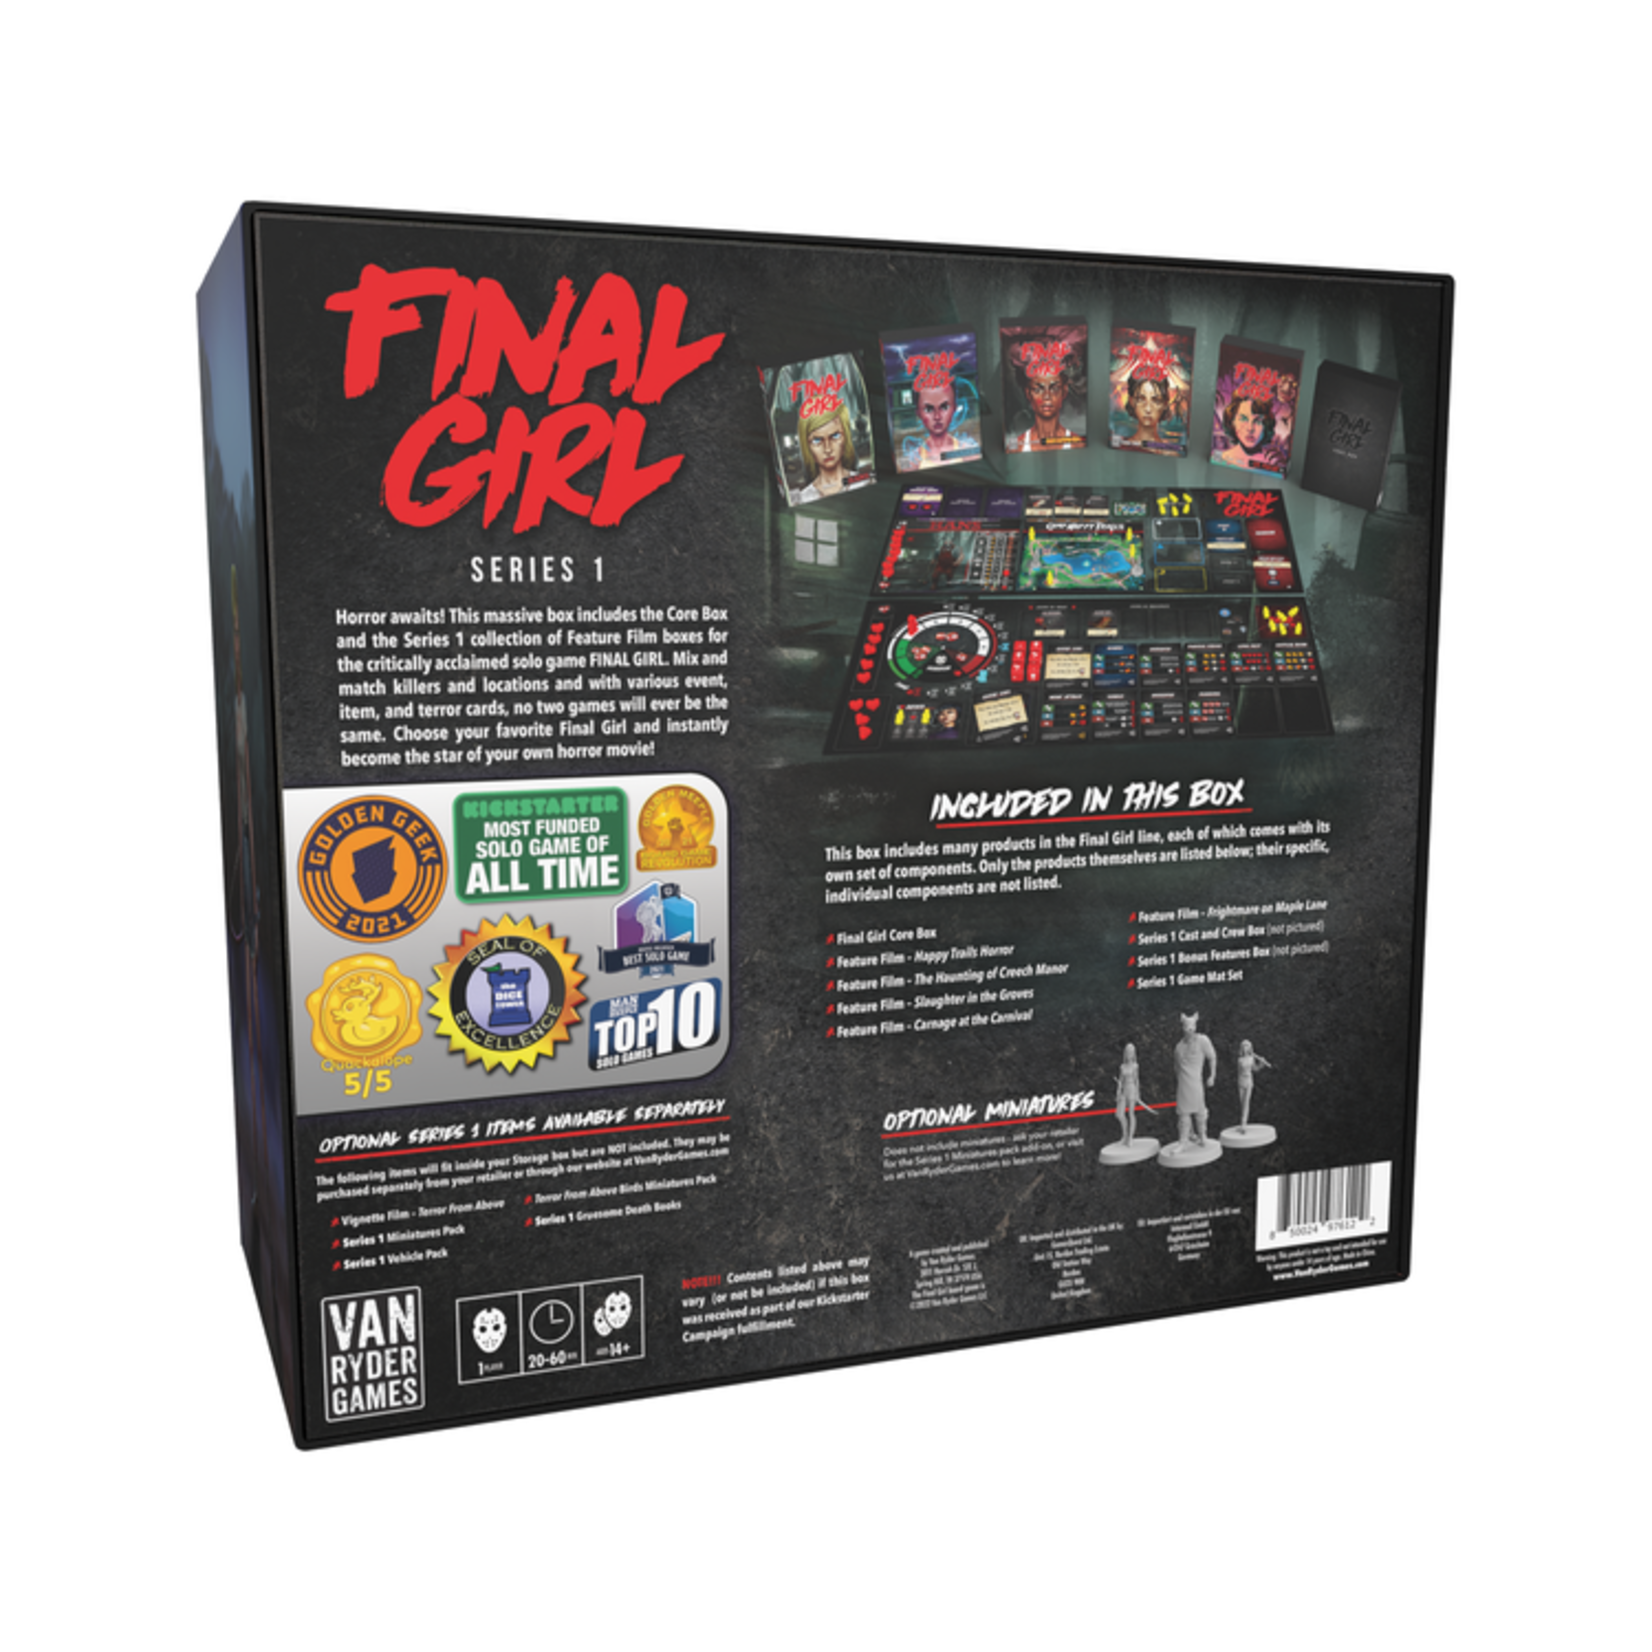 Final Girl Franchise Box: Series 1